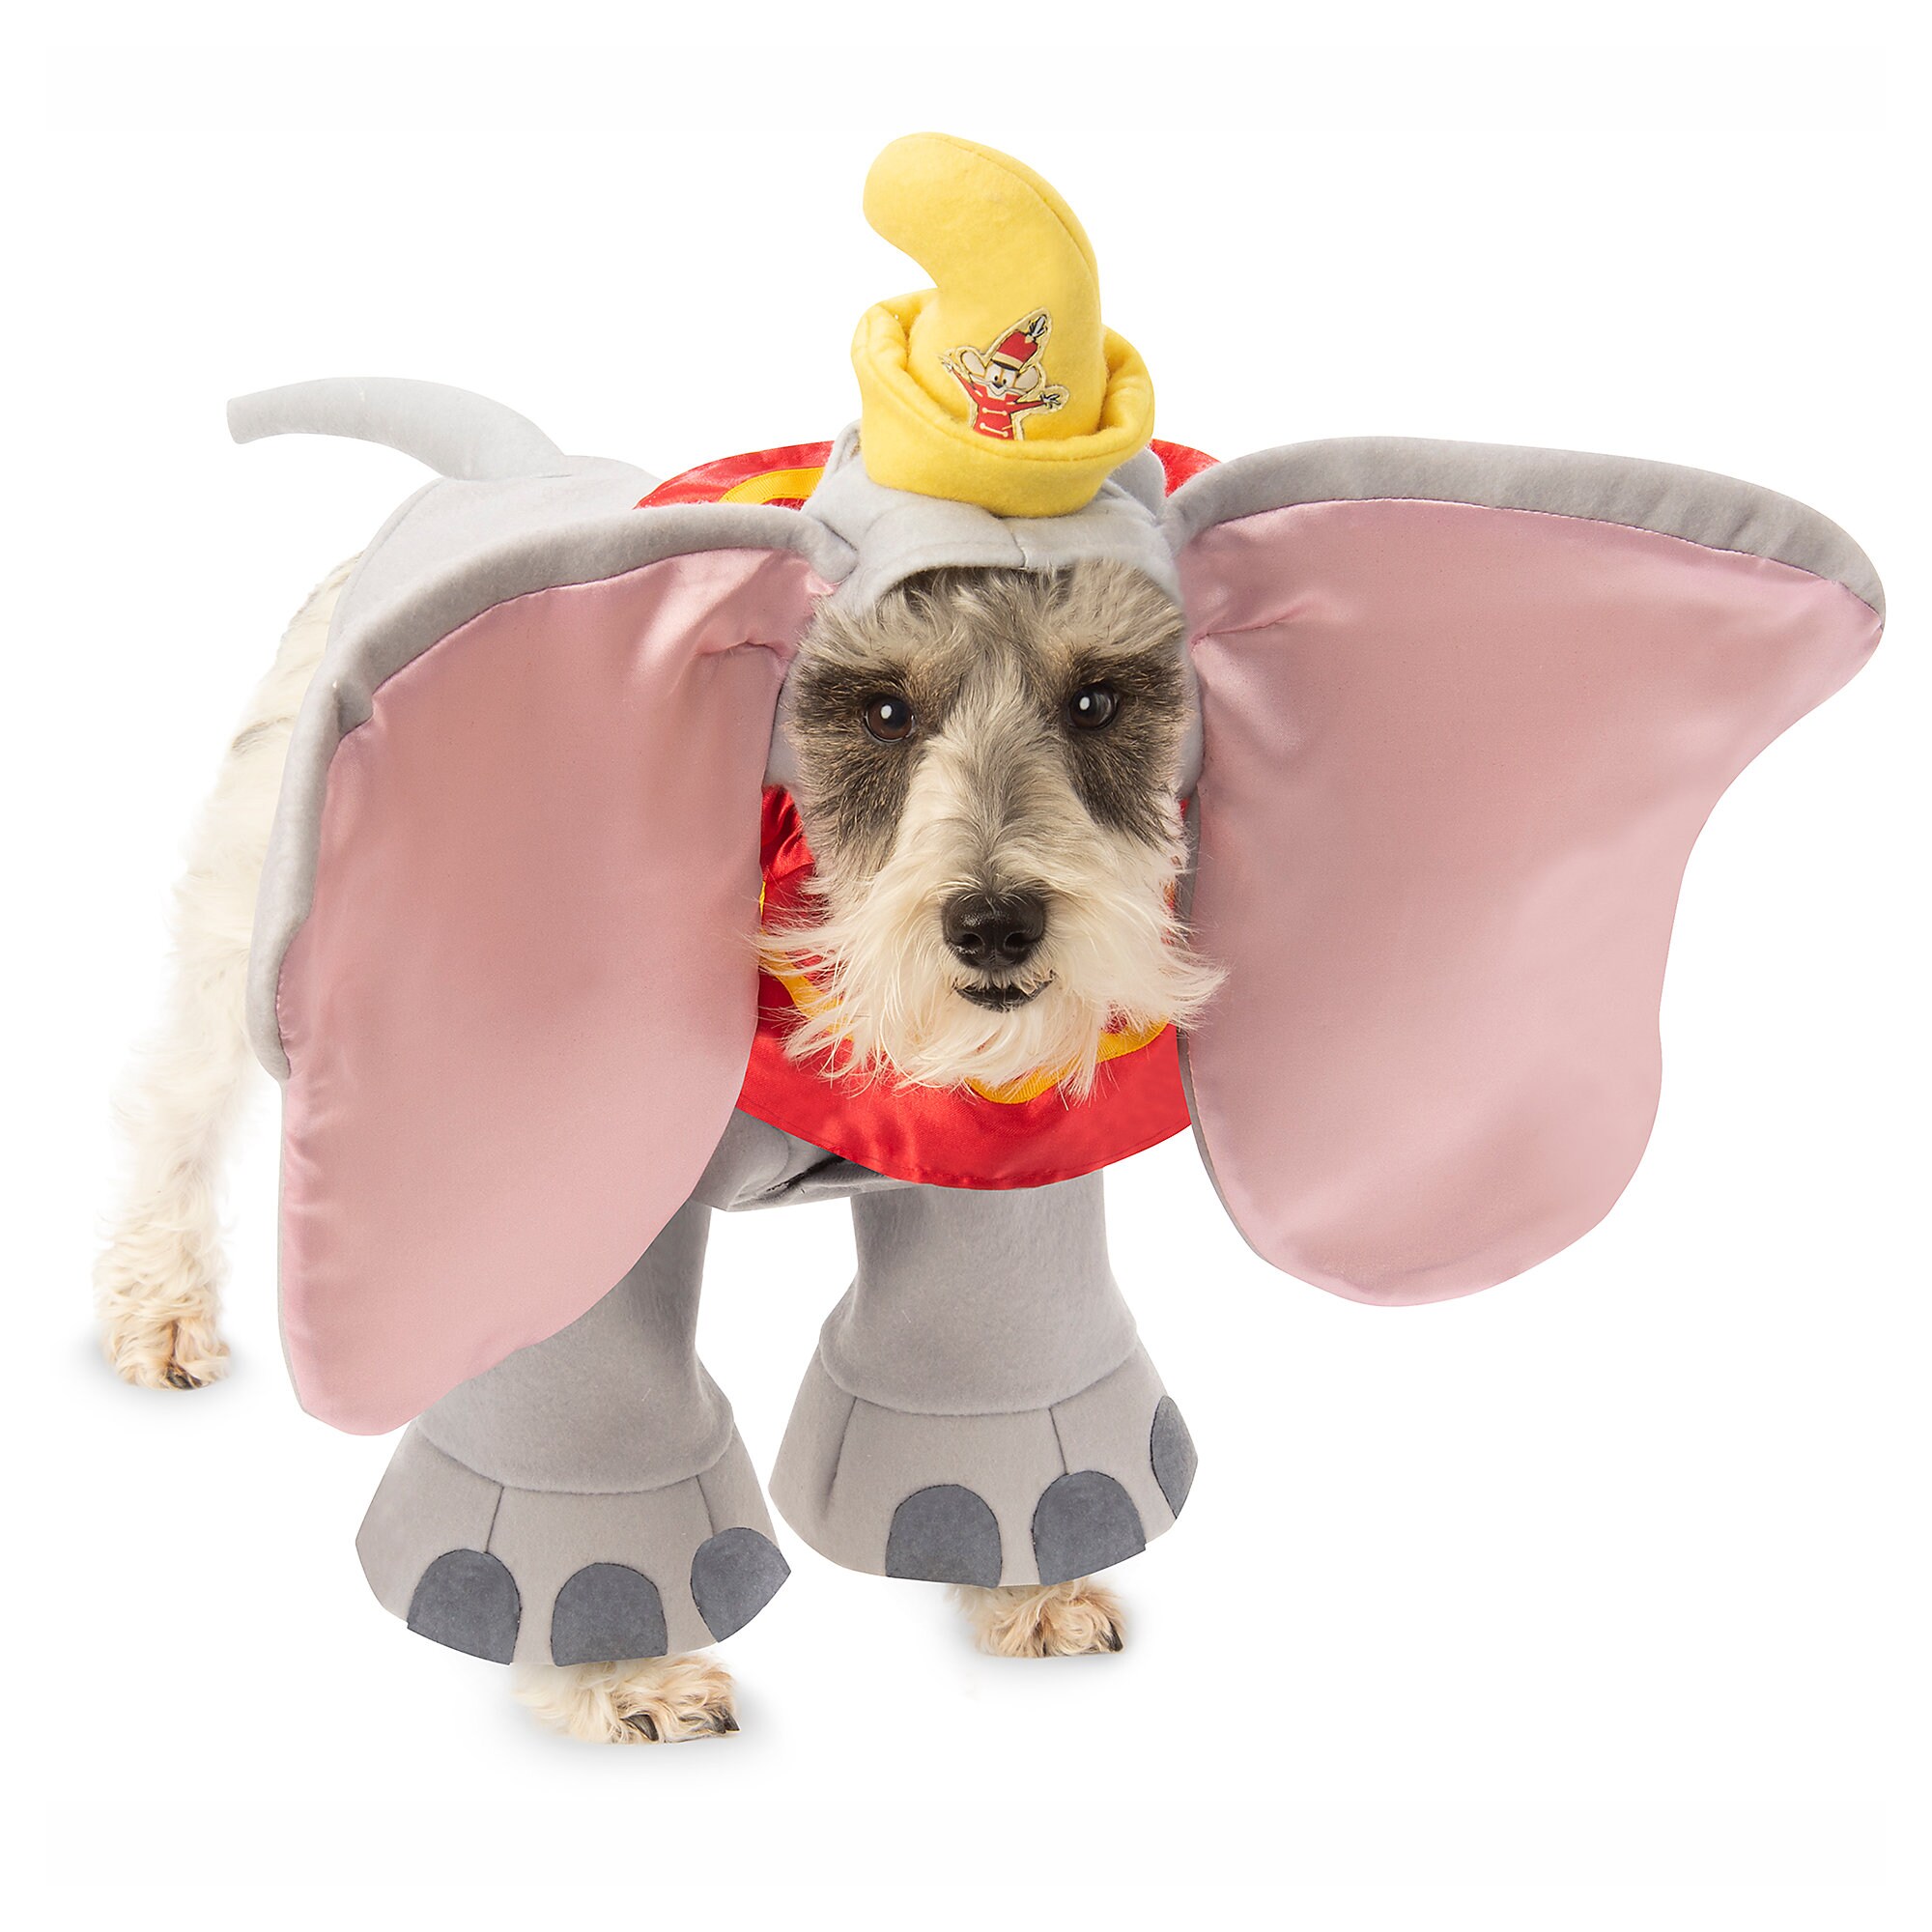 Dumbo Pet Costume by Rubie's